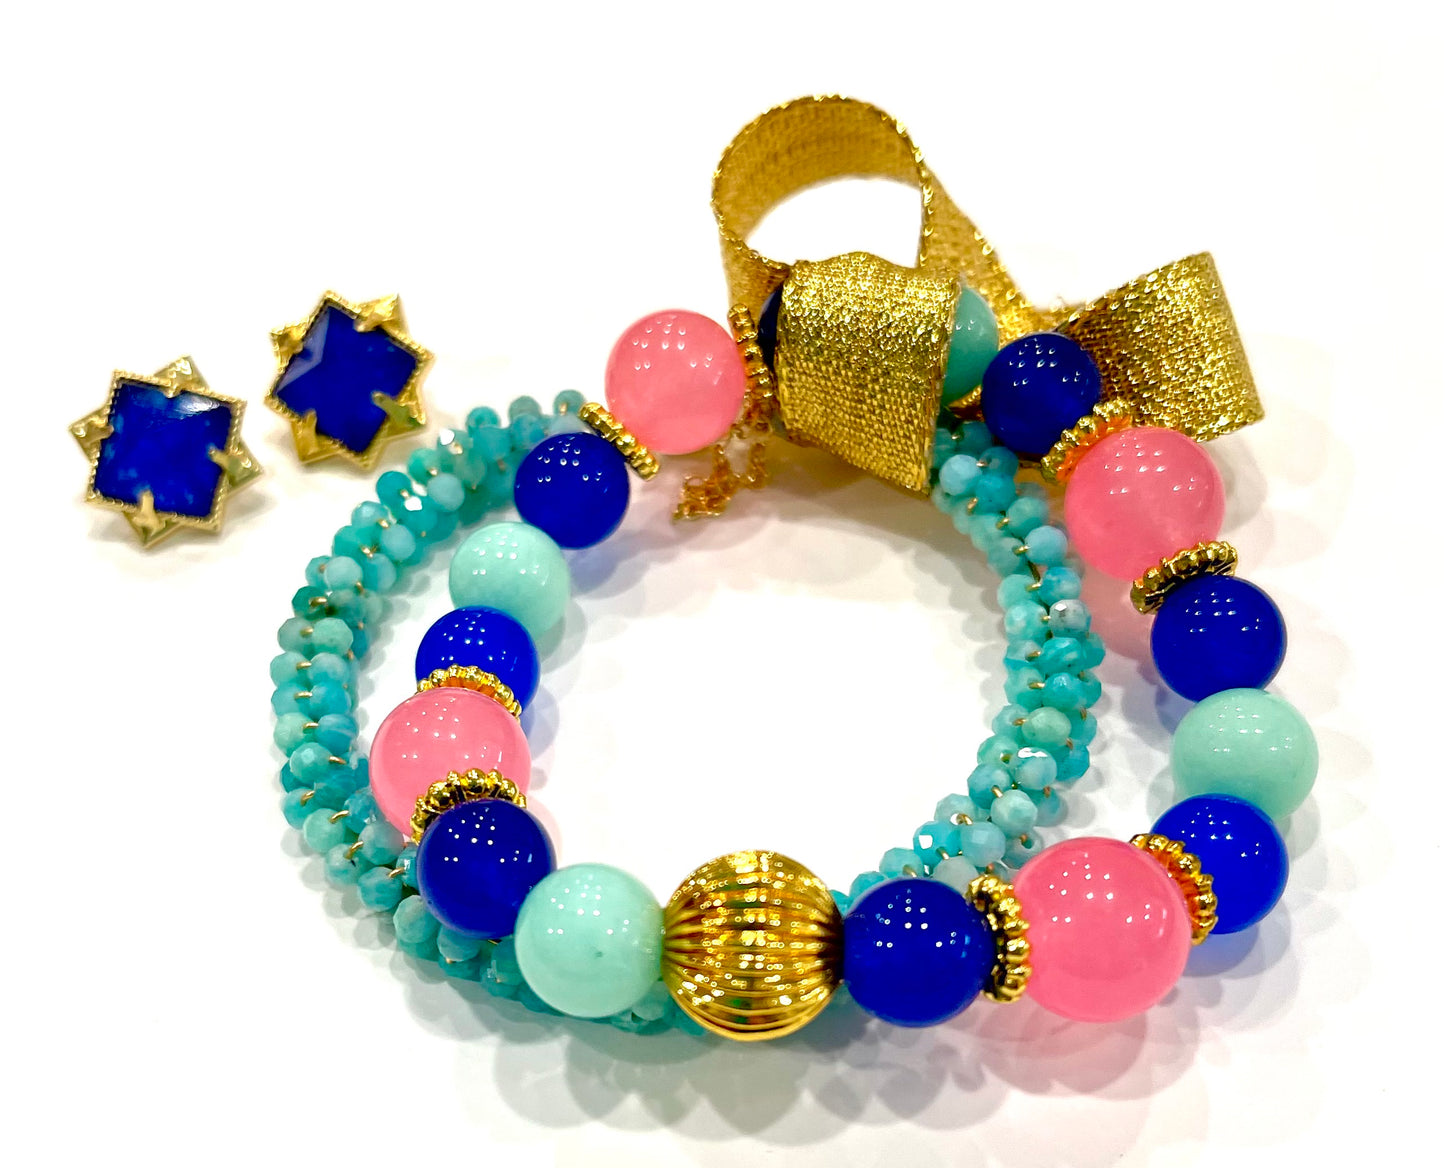 Colorful Amazonite, Chalcedony and Quartz Gemstone Bracelets and Earrings Set